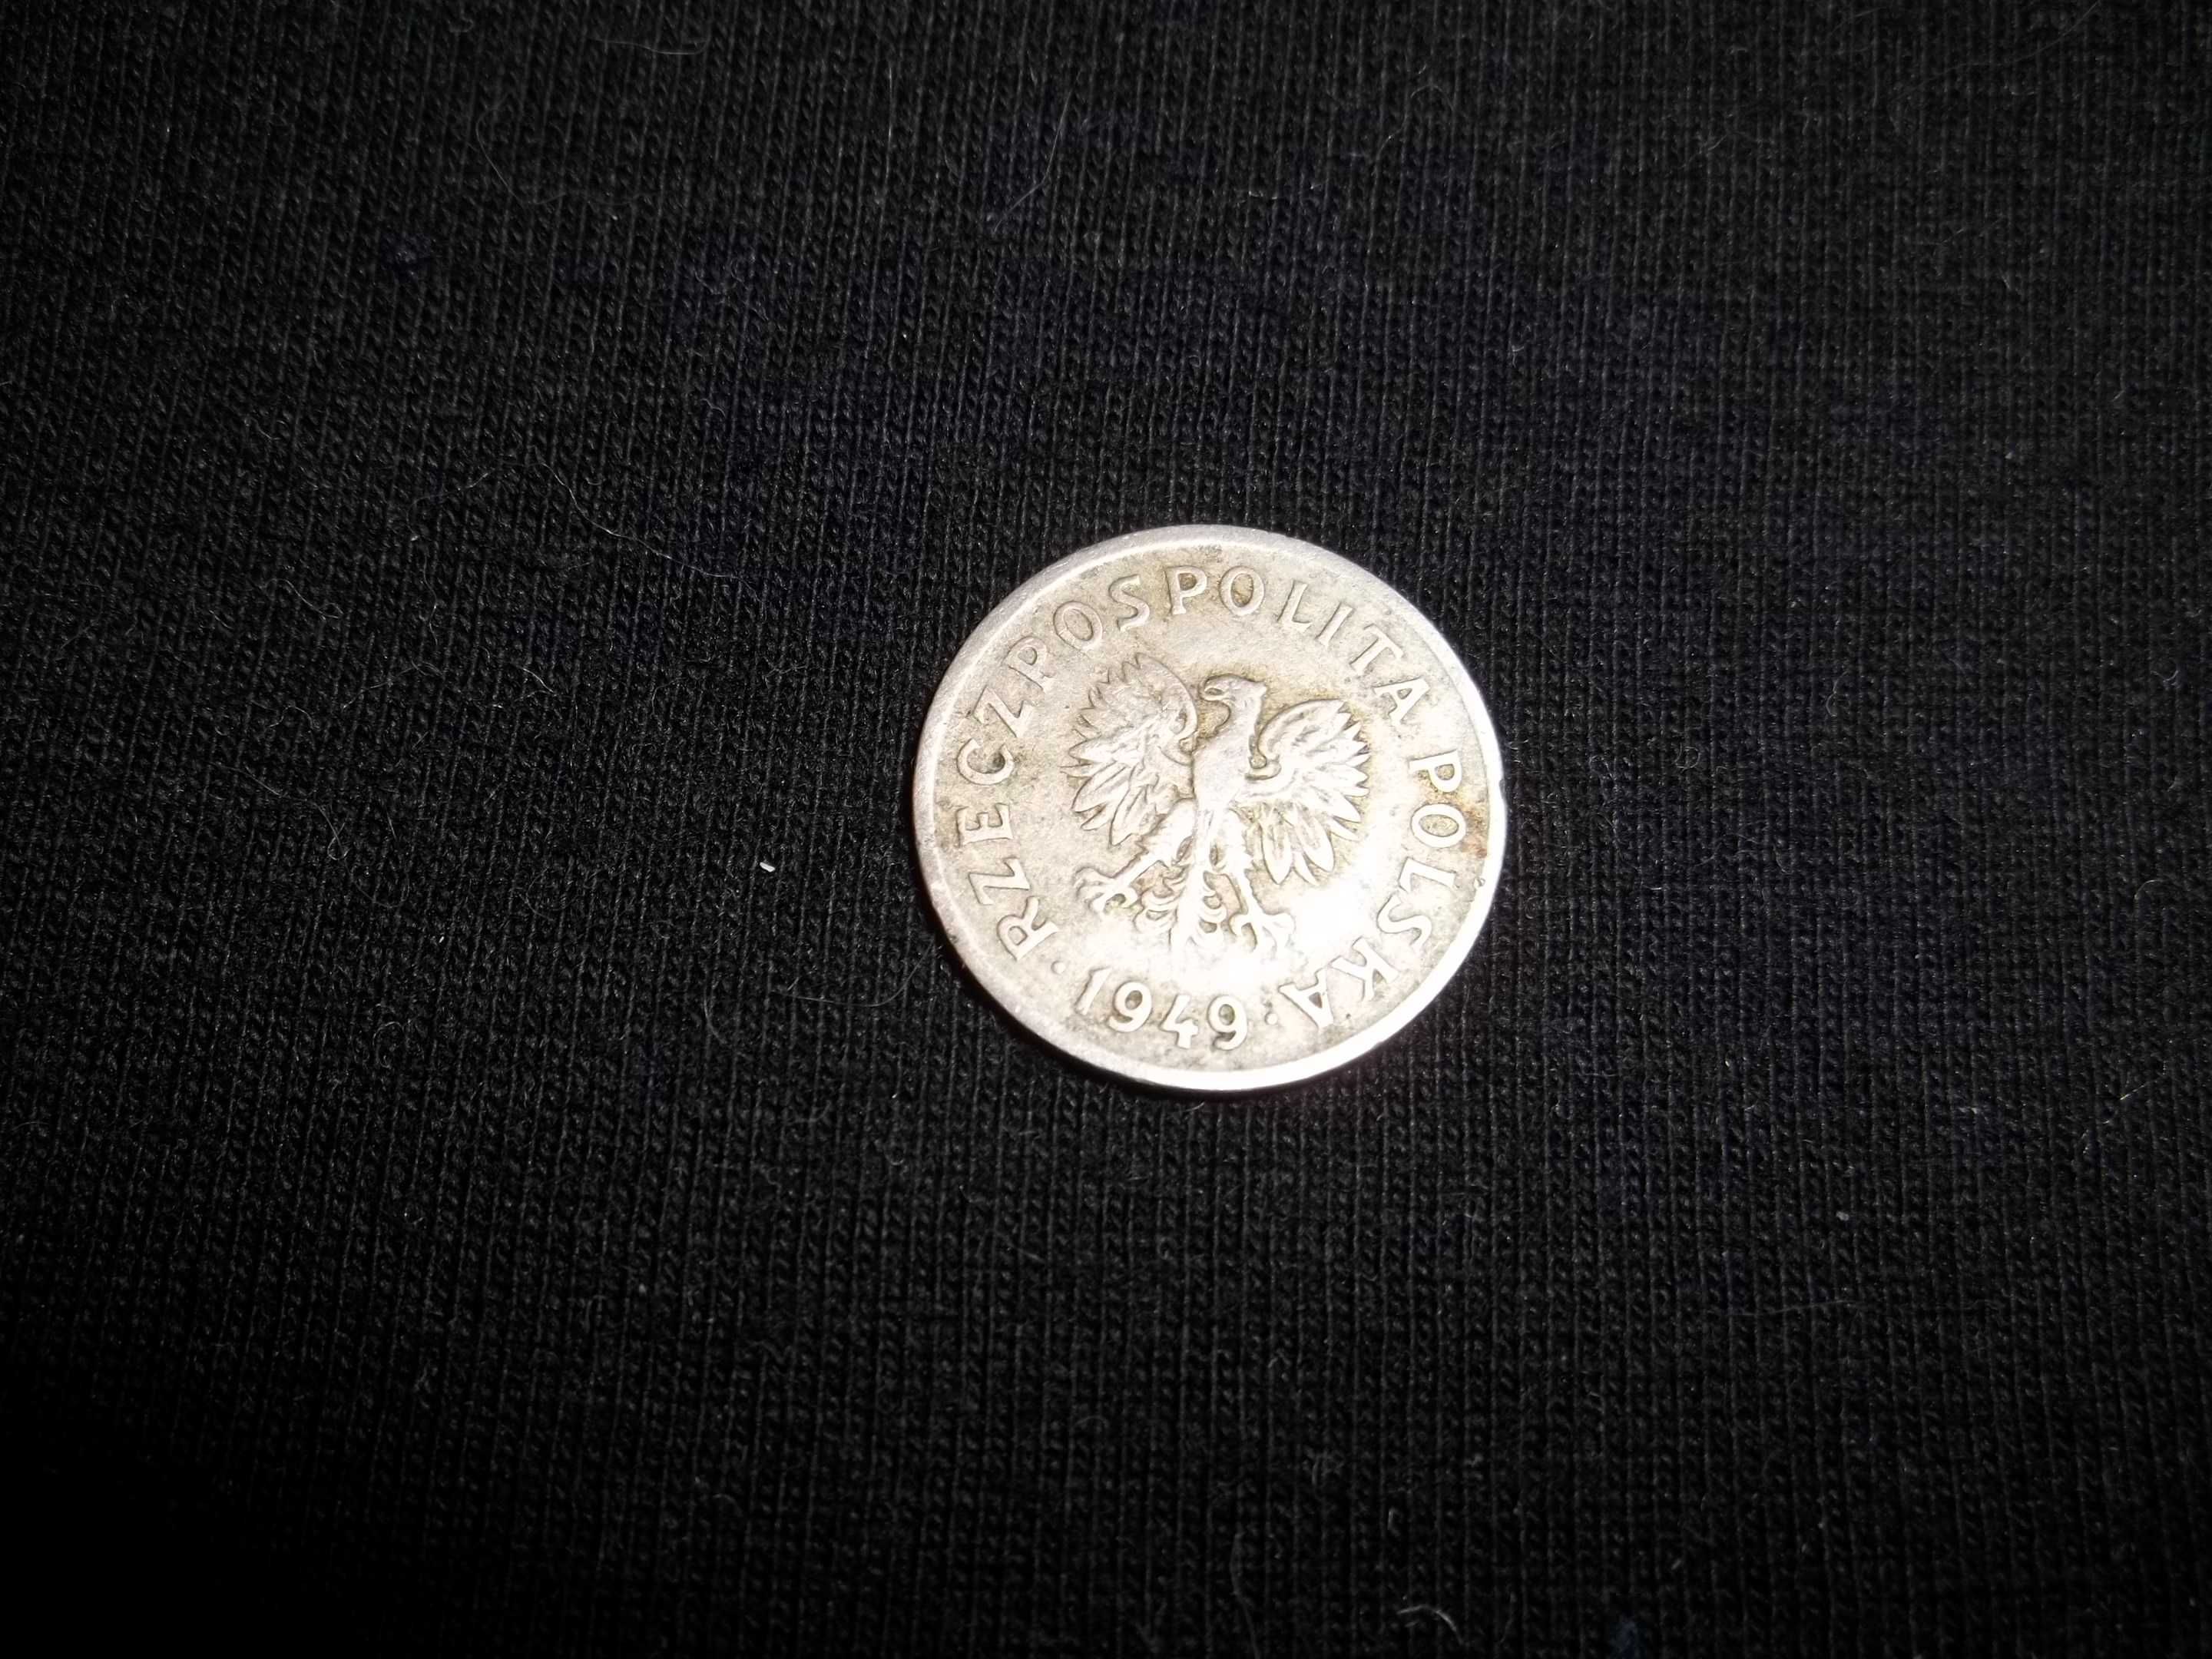 Moneta 10 groszy z 1949r.Monety,numizmatyka.